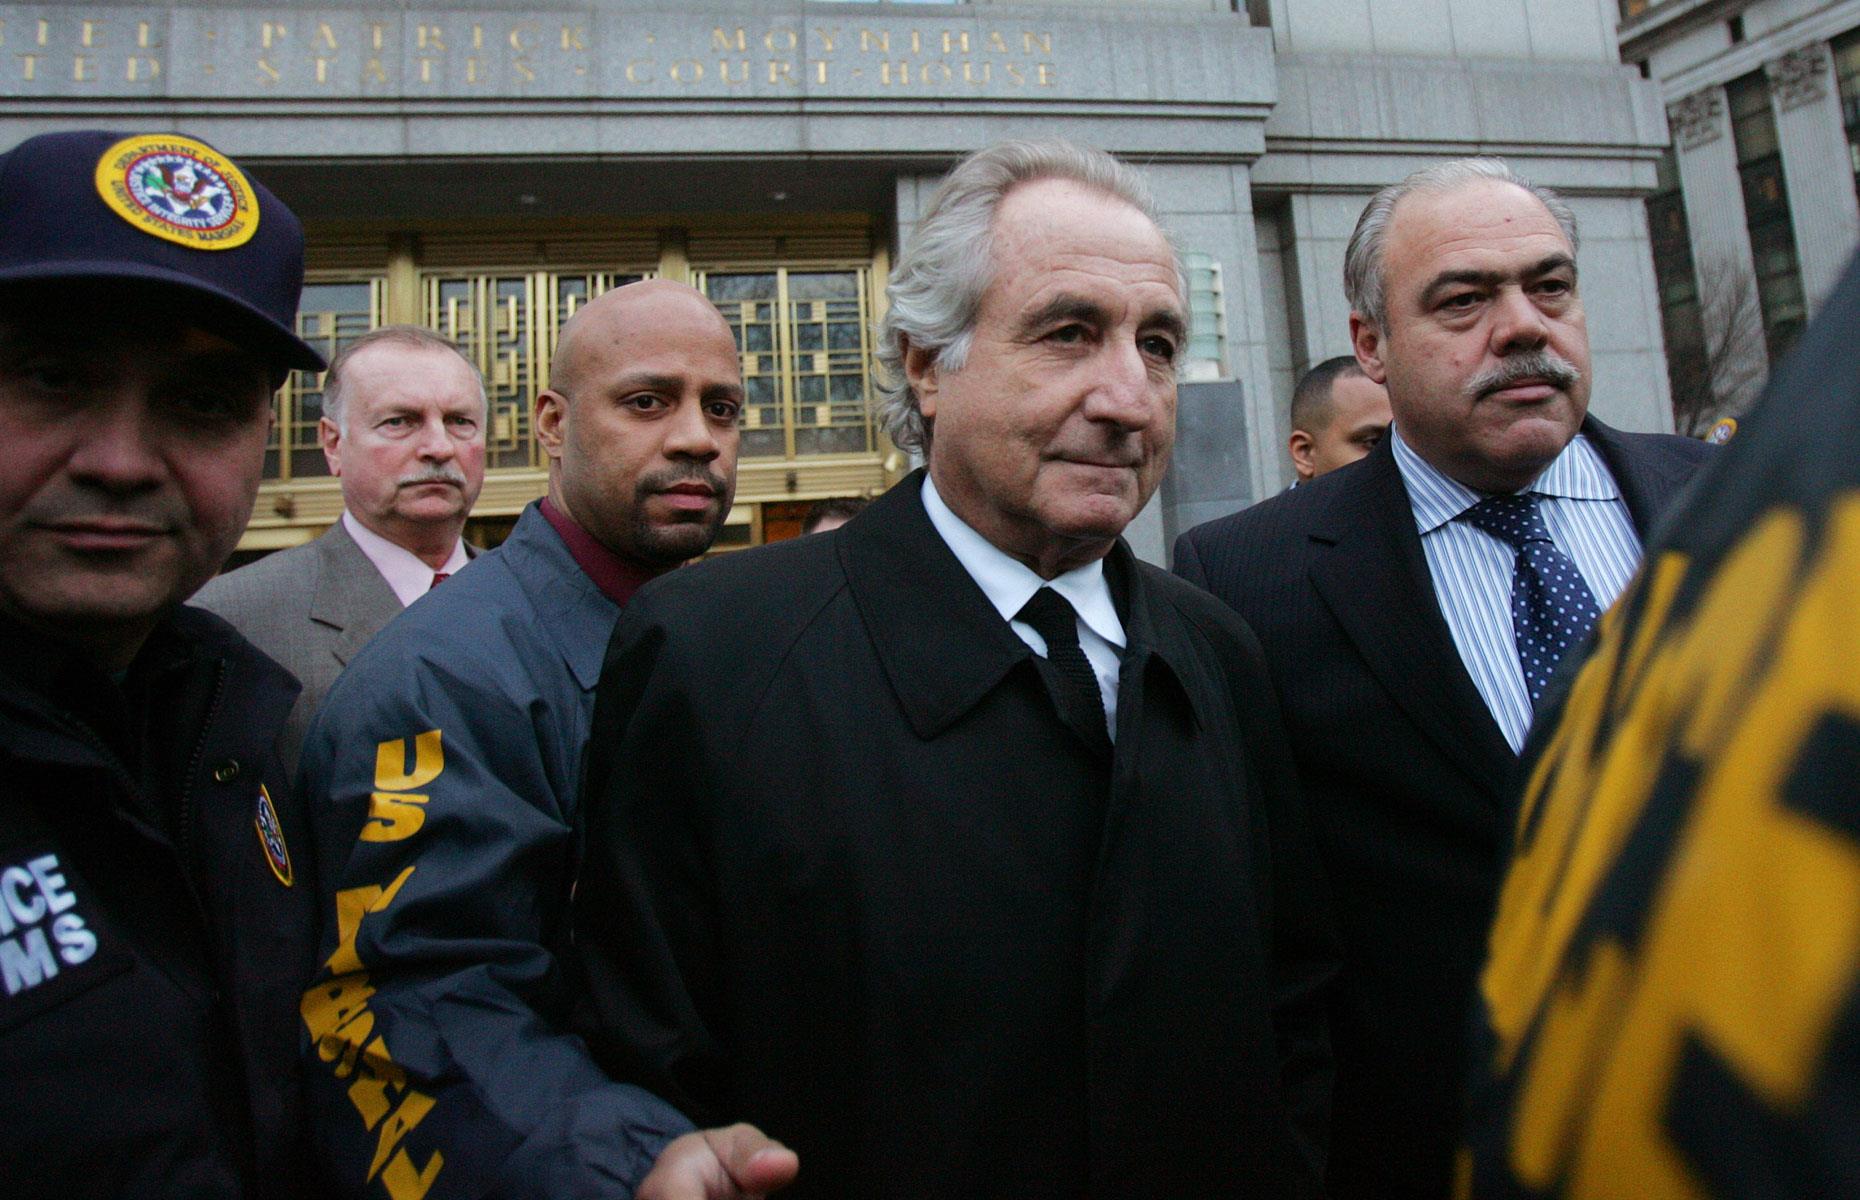 Bernie Madoff: 150-year custodial sentence